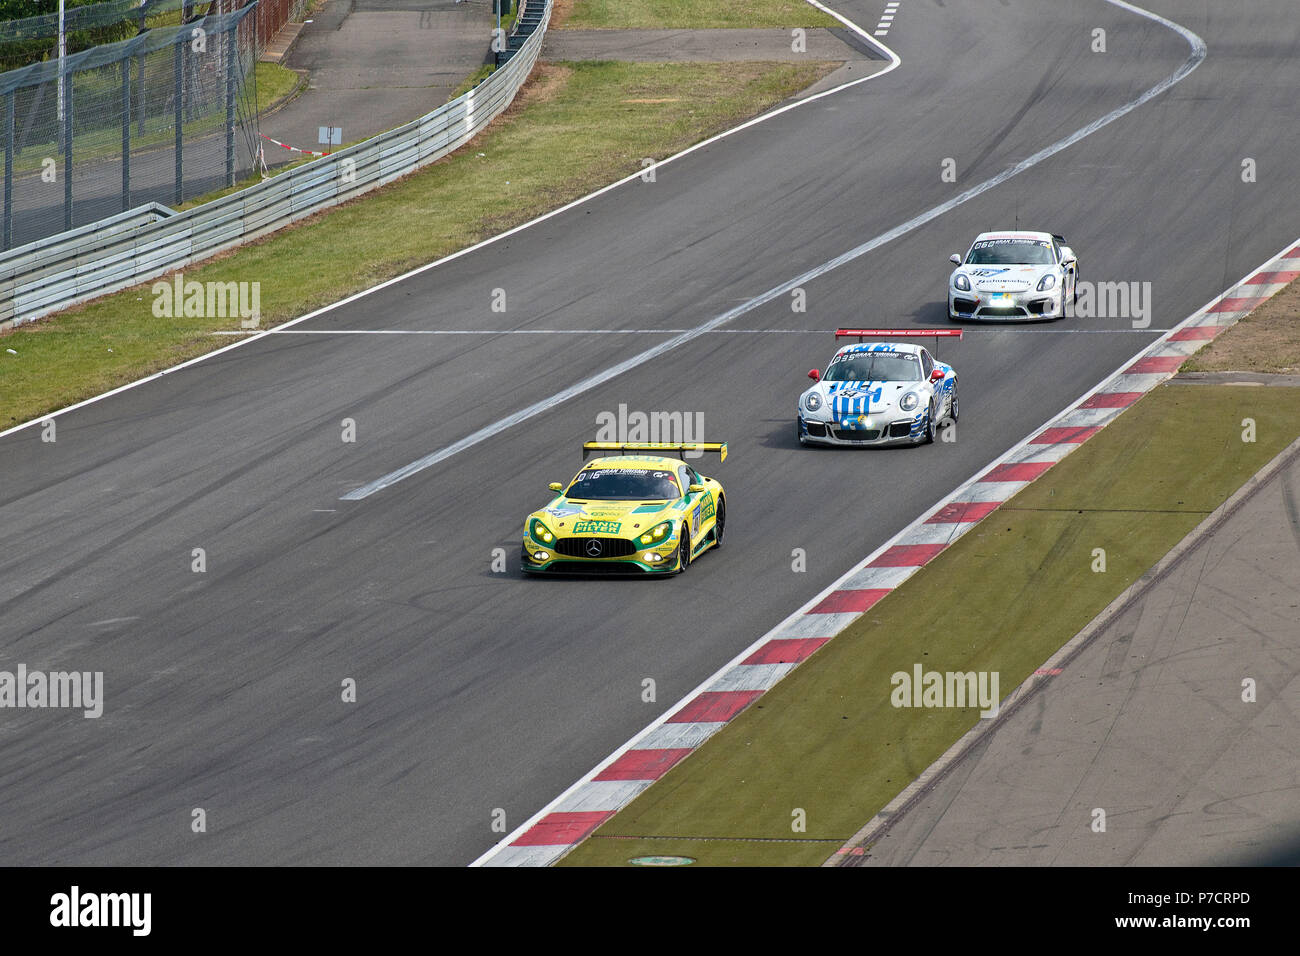 Mercedes-AMG GT3 followed by Porsche 911 GT3, Nuerburgring 24h race 2017, long distance race, Eifel, Rhineland-Palatinate, Germany, Europe Stock Photo